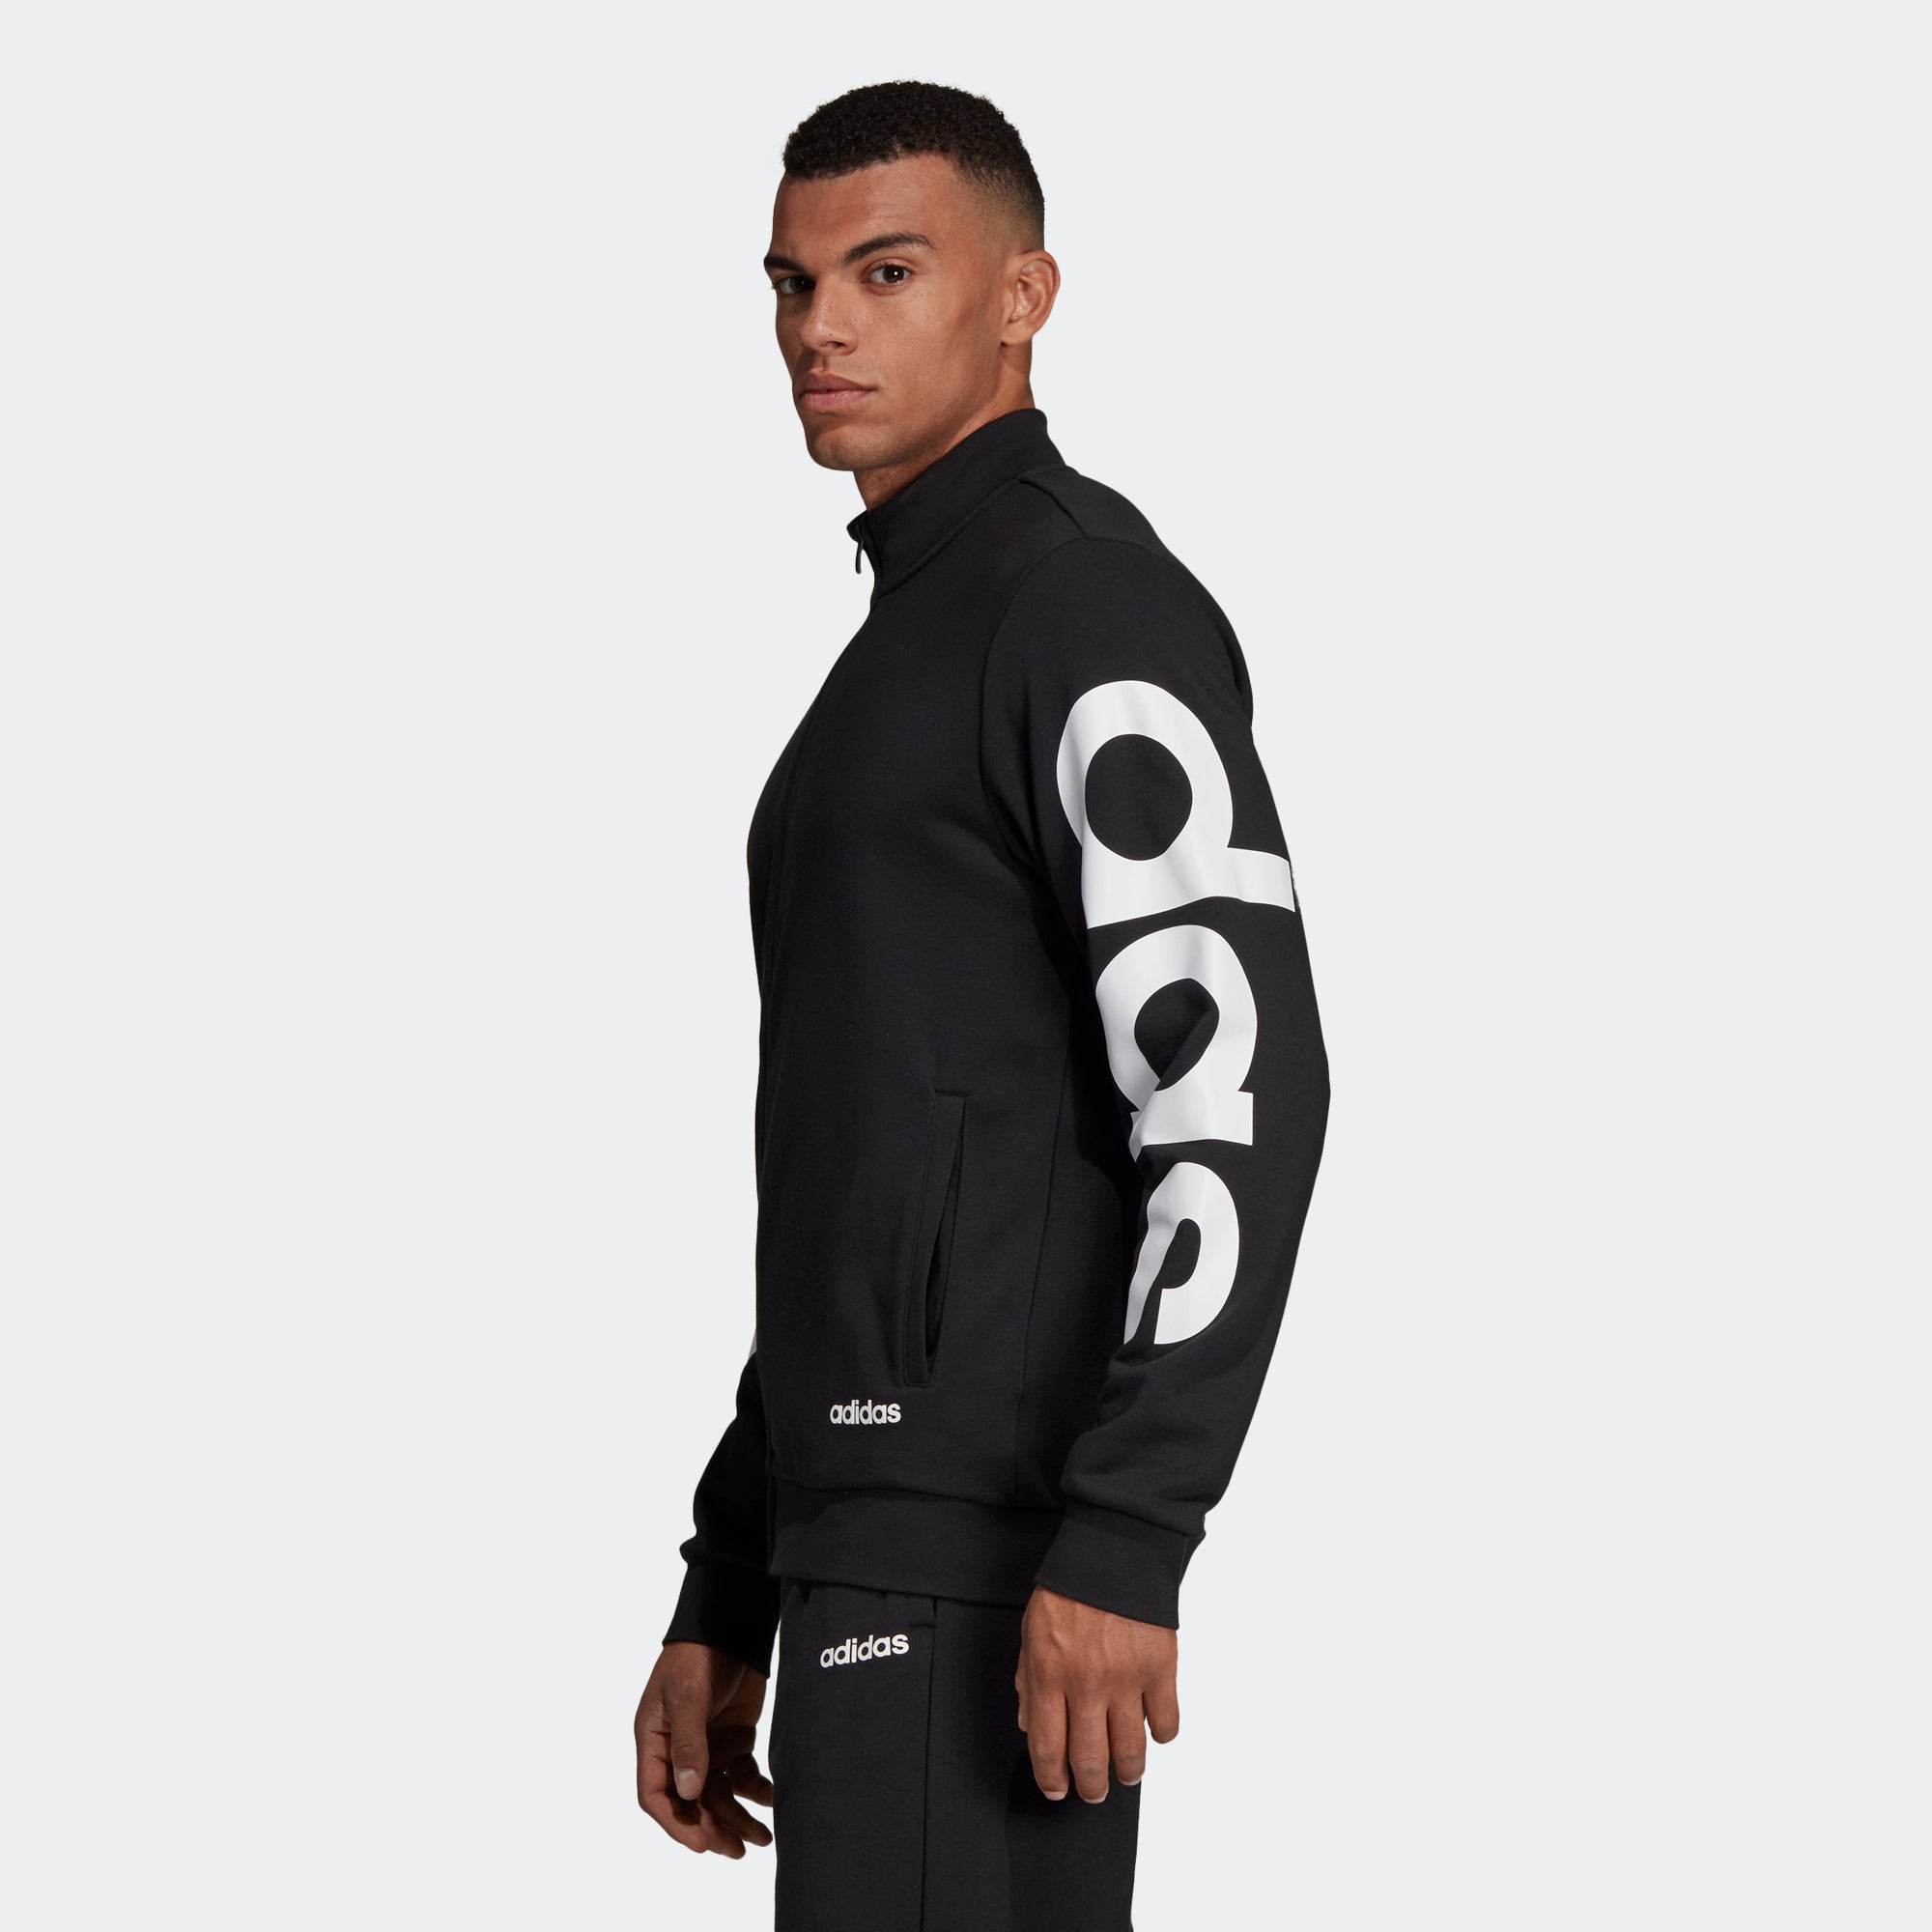 mens adidas track jacket black